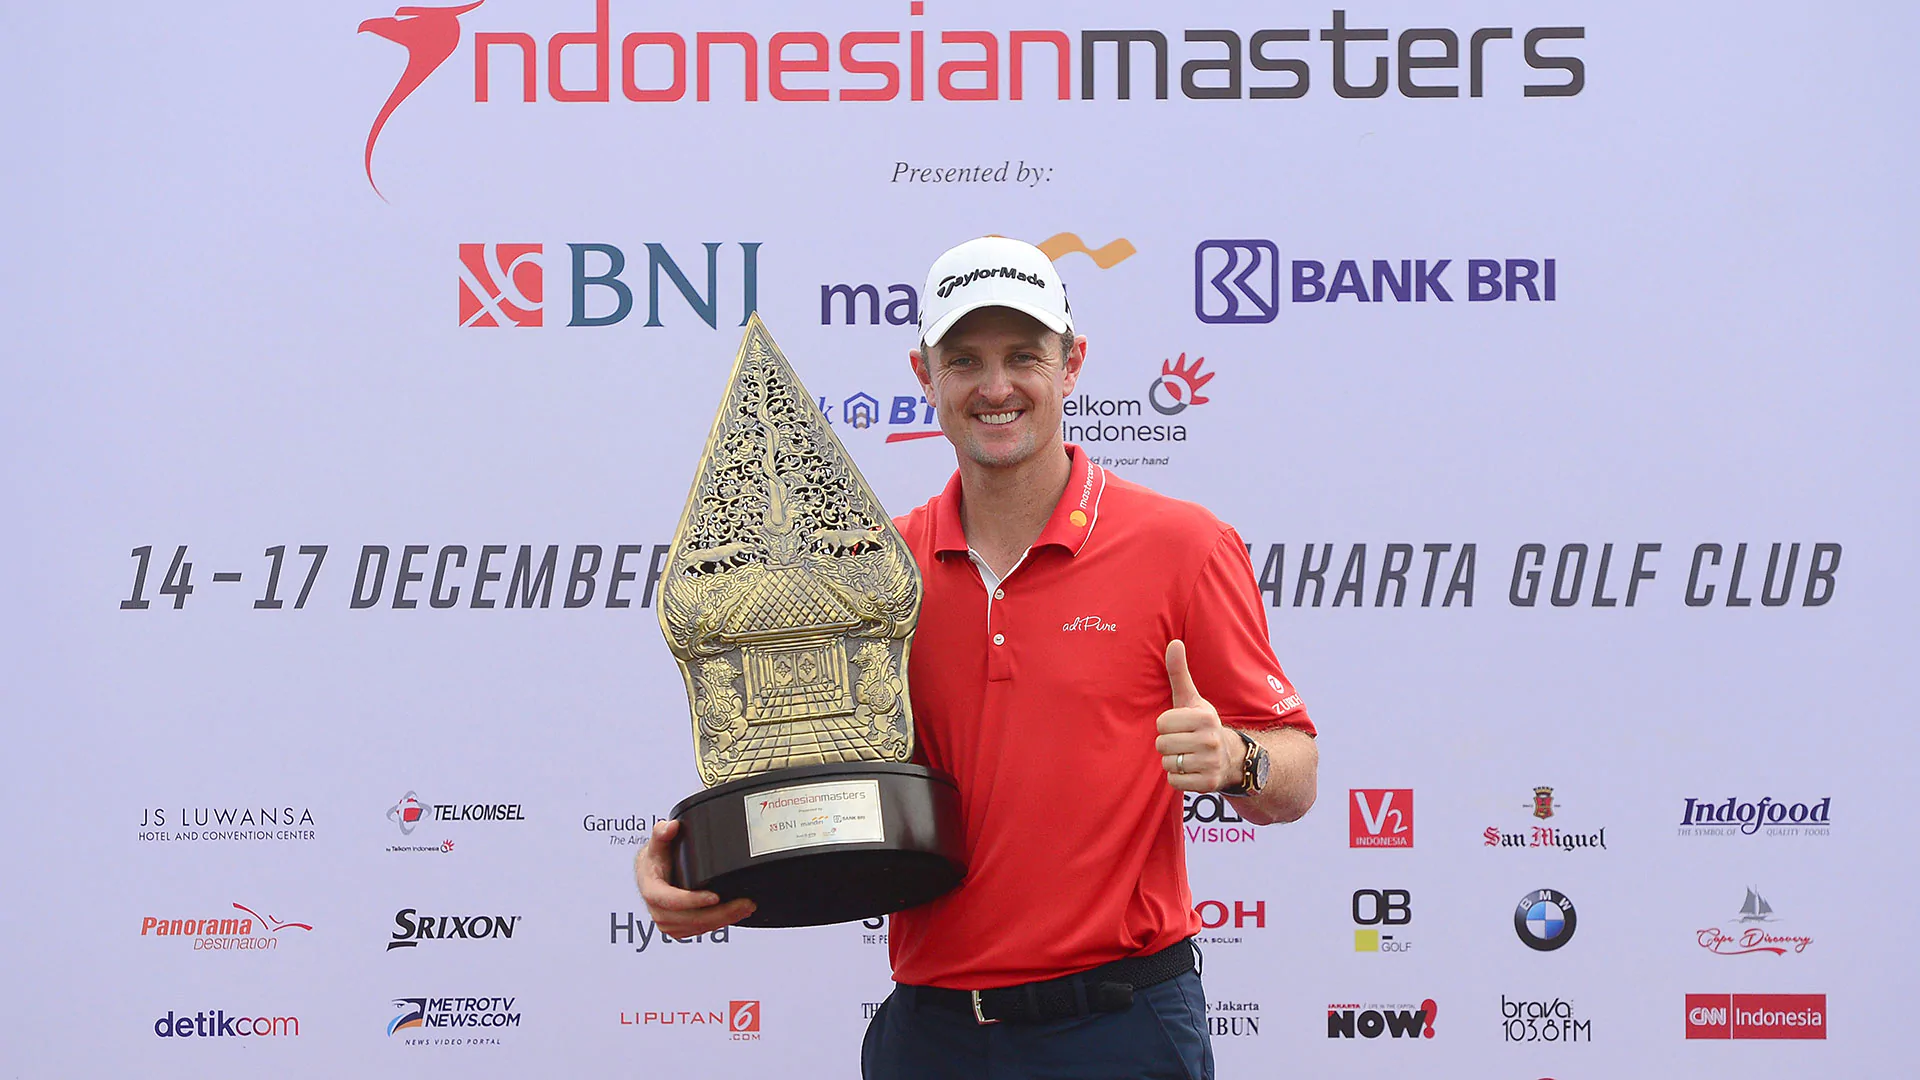 Rose wins; Aphibarnrat earns Masters bid in Indonesia